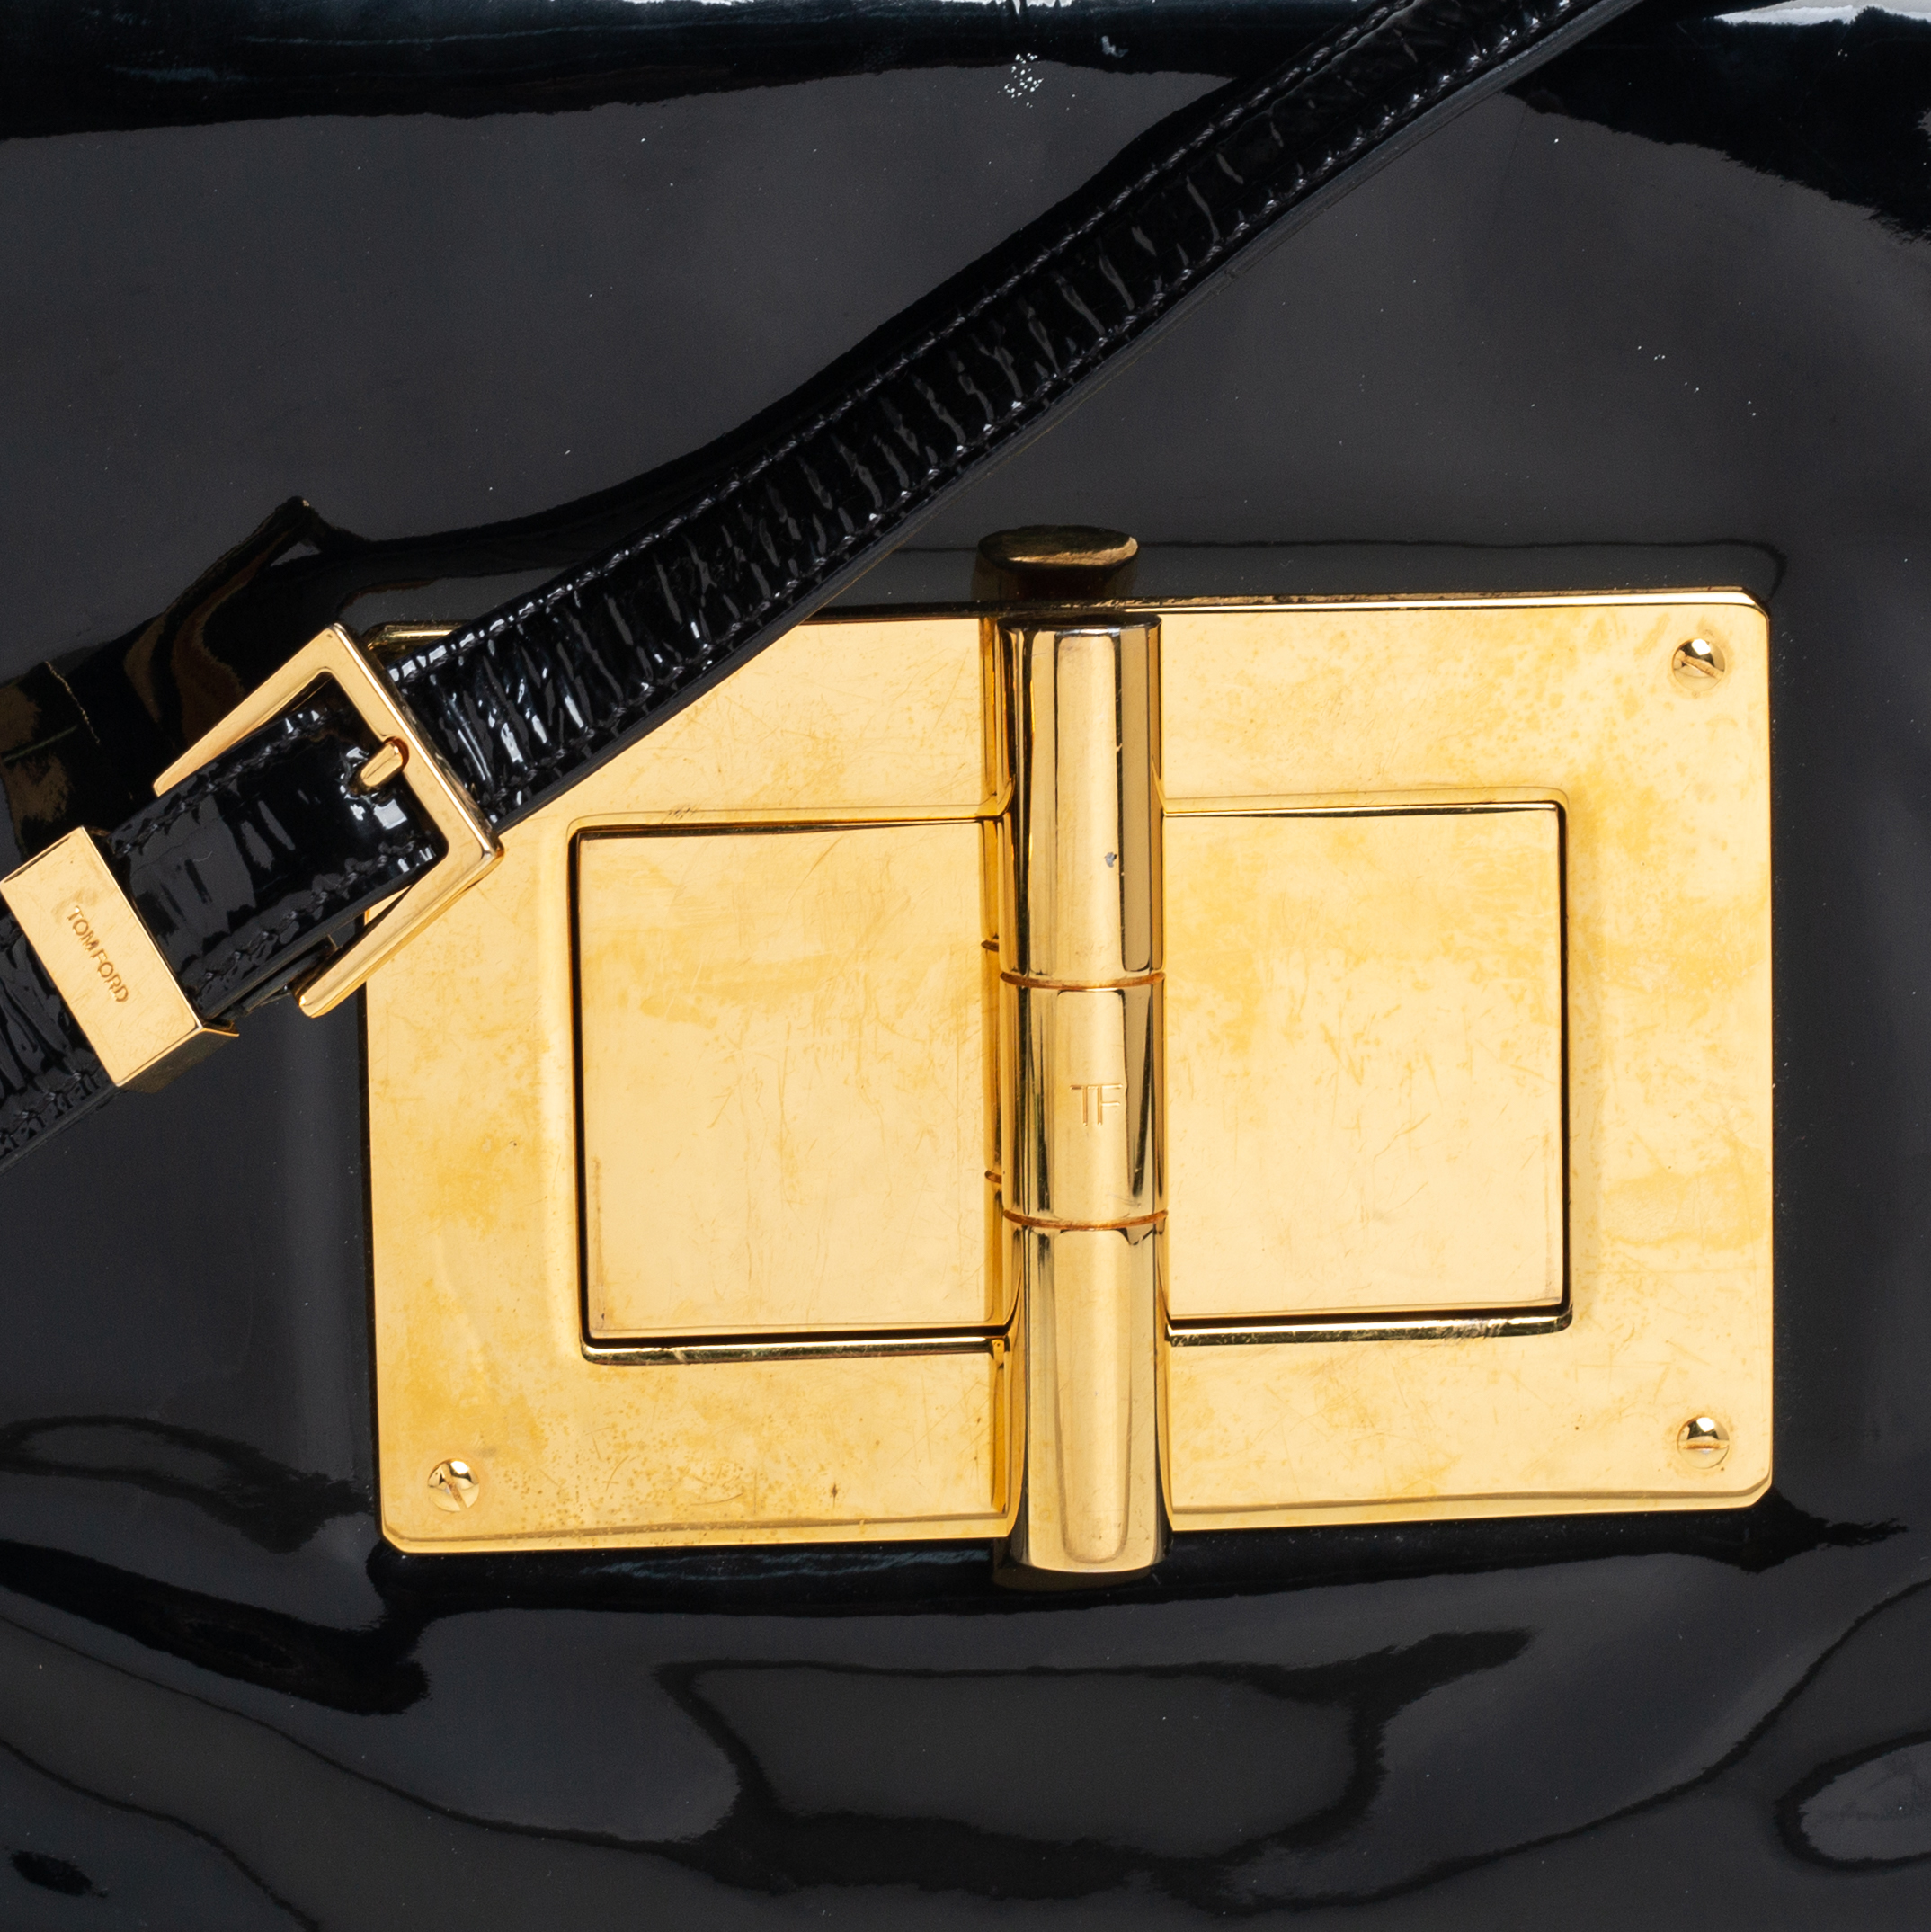 Tom Ford Black Patent Leather Natalia Crossbody Bag